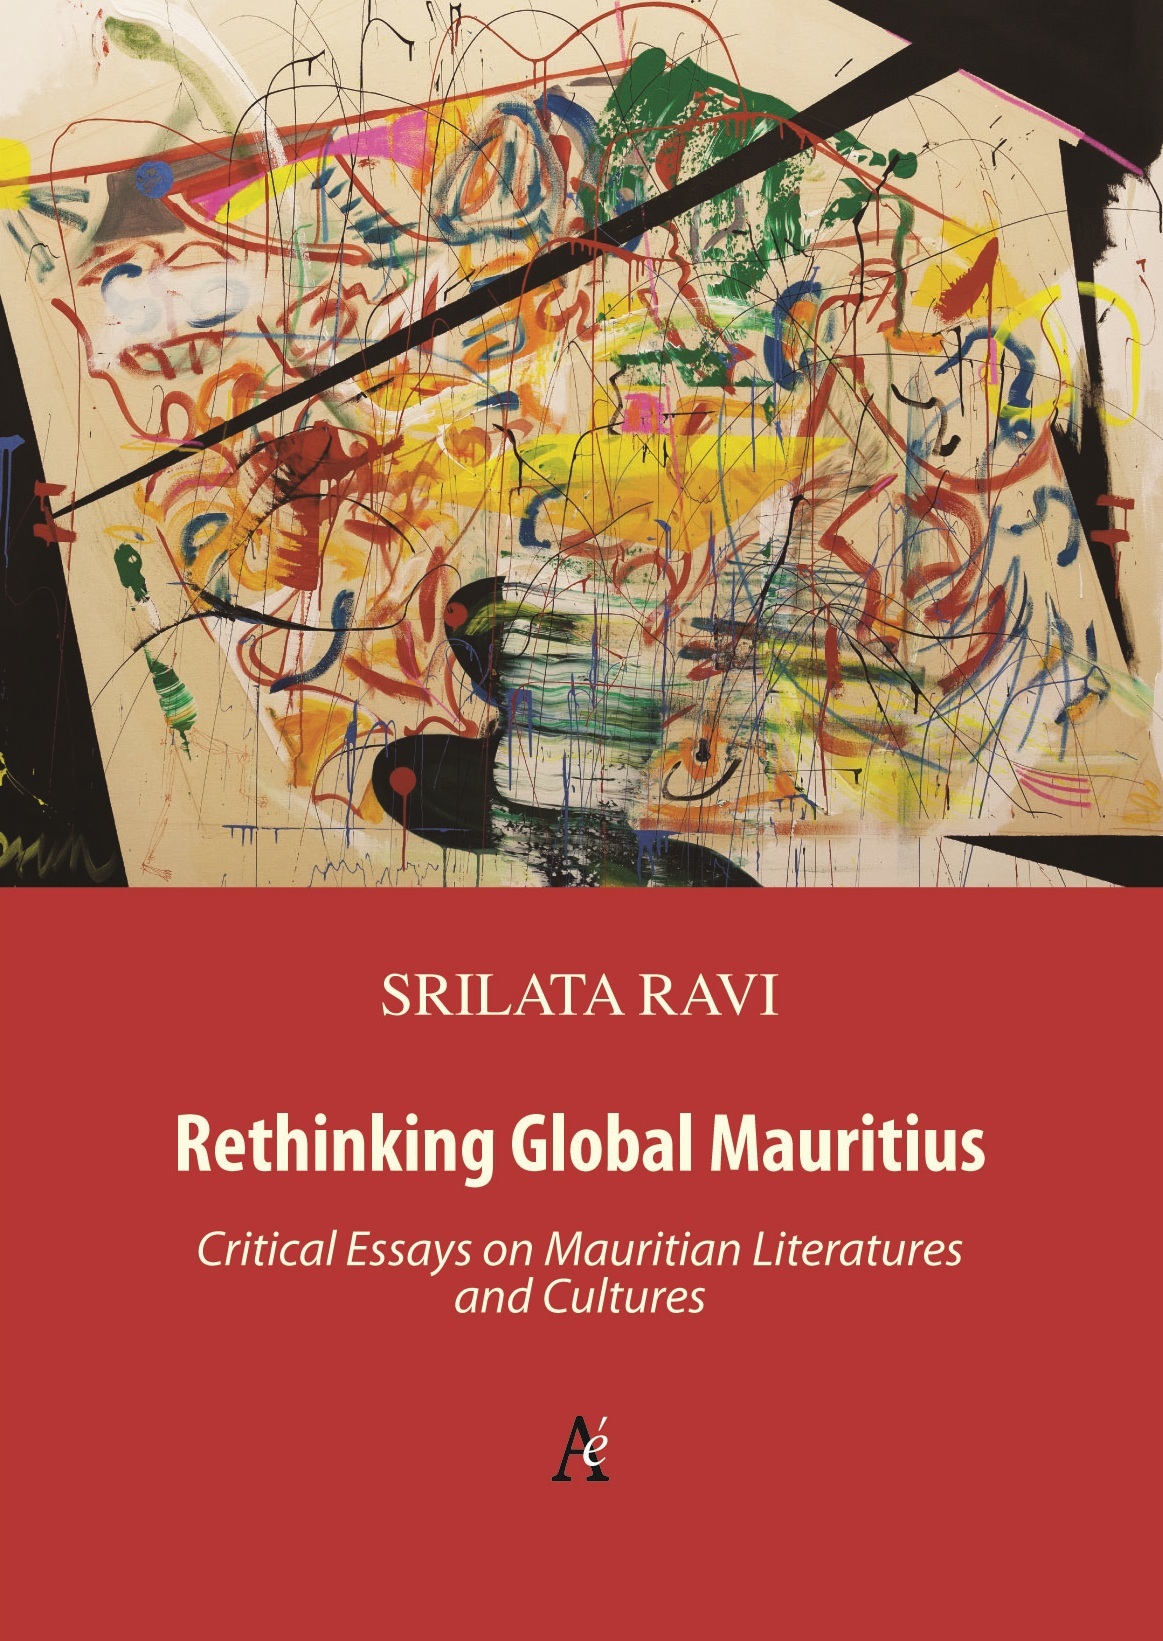 Srilata Ravi. Rethinking Global Mauritis, Critical Essays on Mauritian Literatures and Cultures.